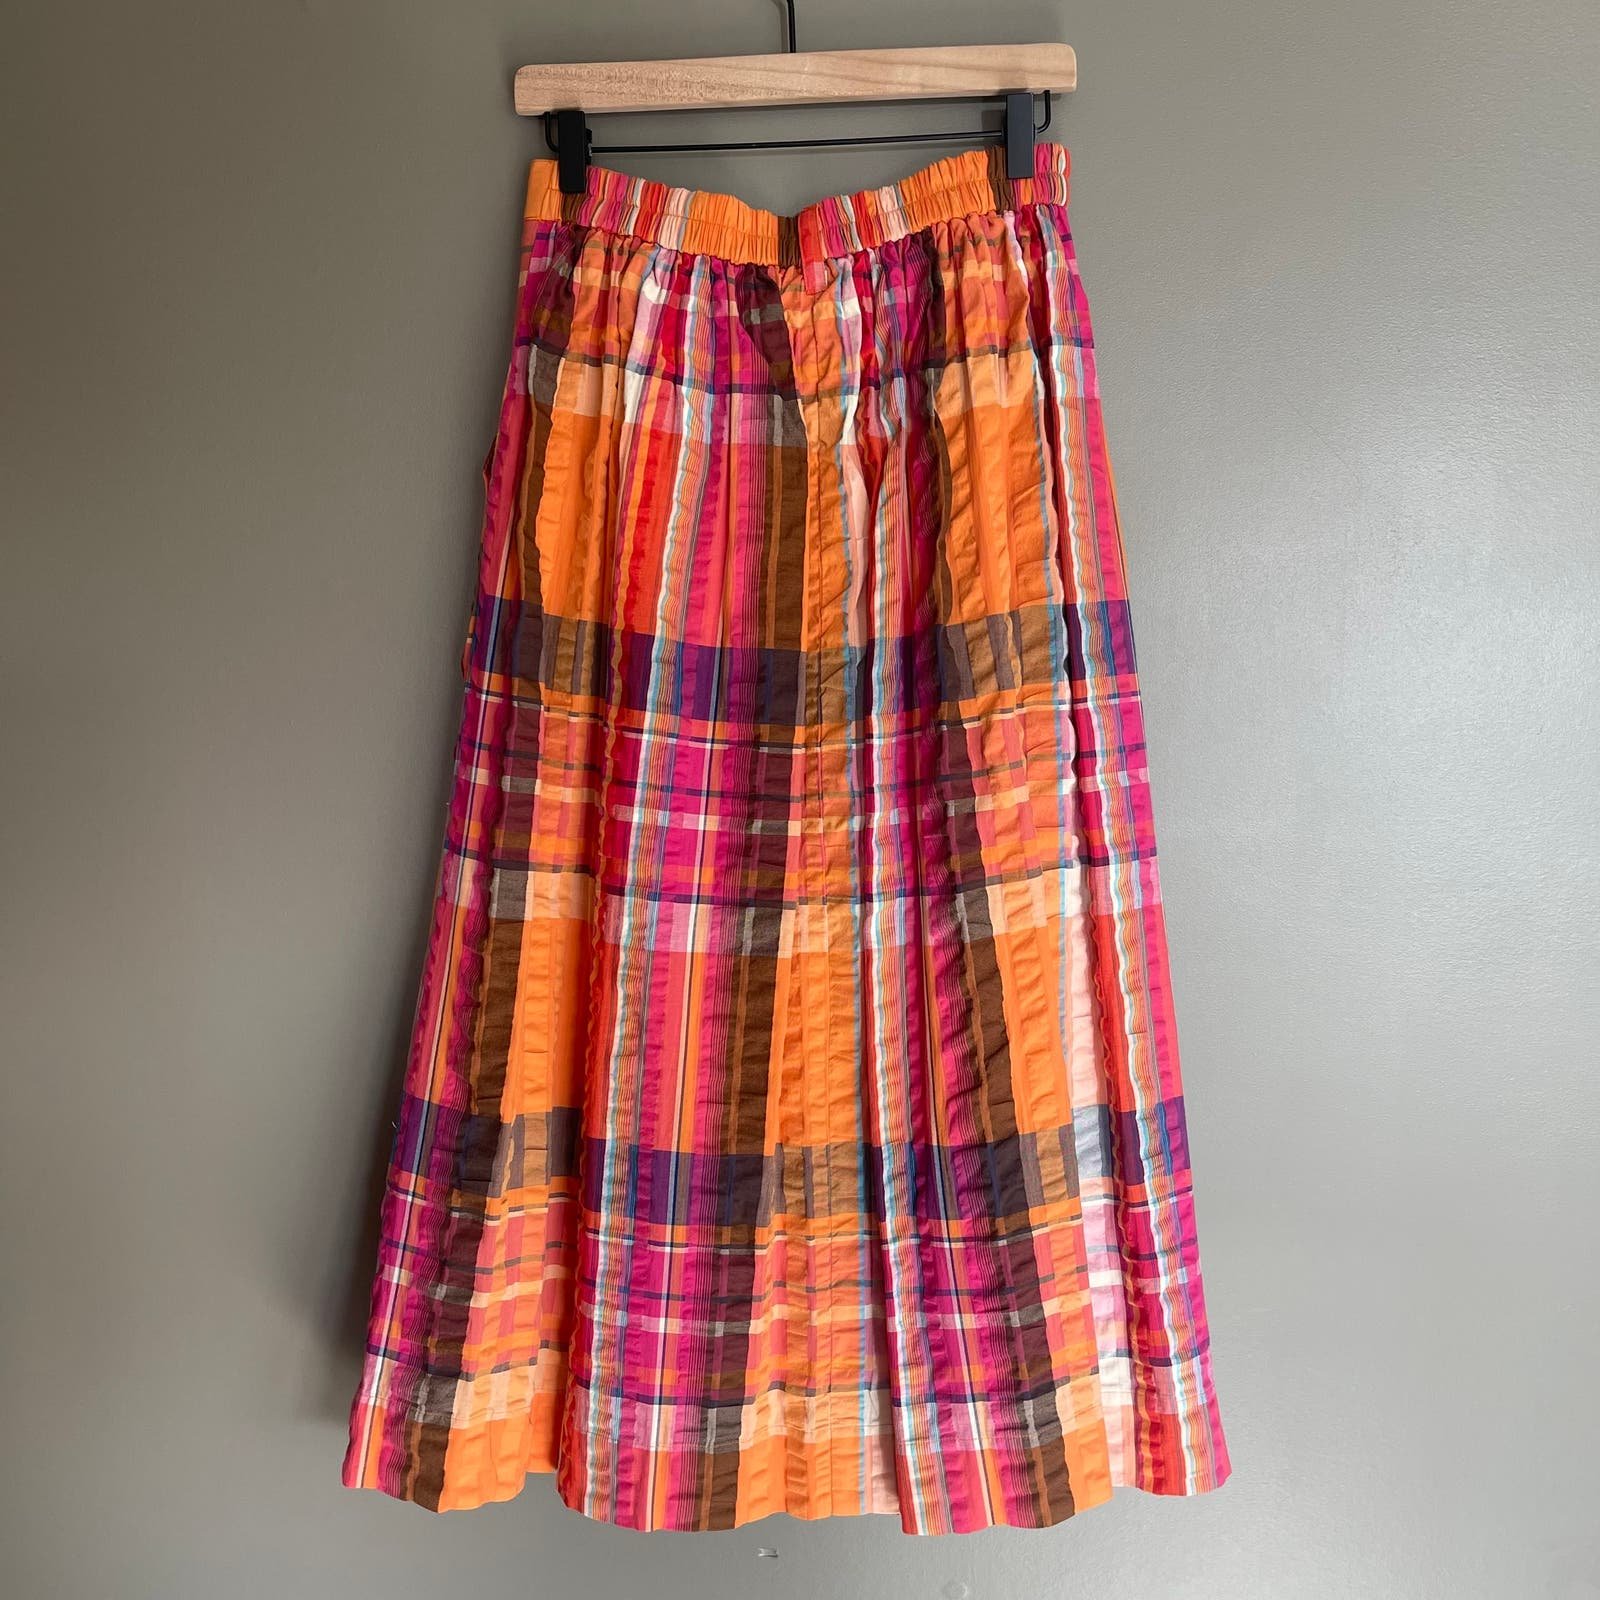 big discount Anthropologie Maeve Pippa Pleated Midi Skirt Size Small Orange Pink Plaid A-Line kUNUC7Xja US Outlet